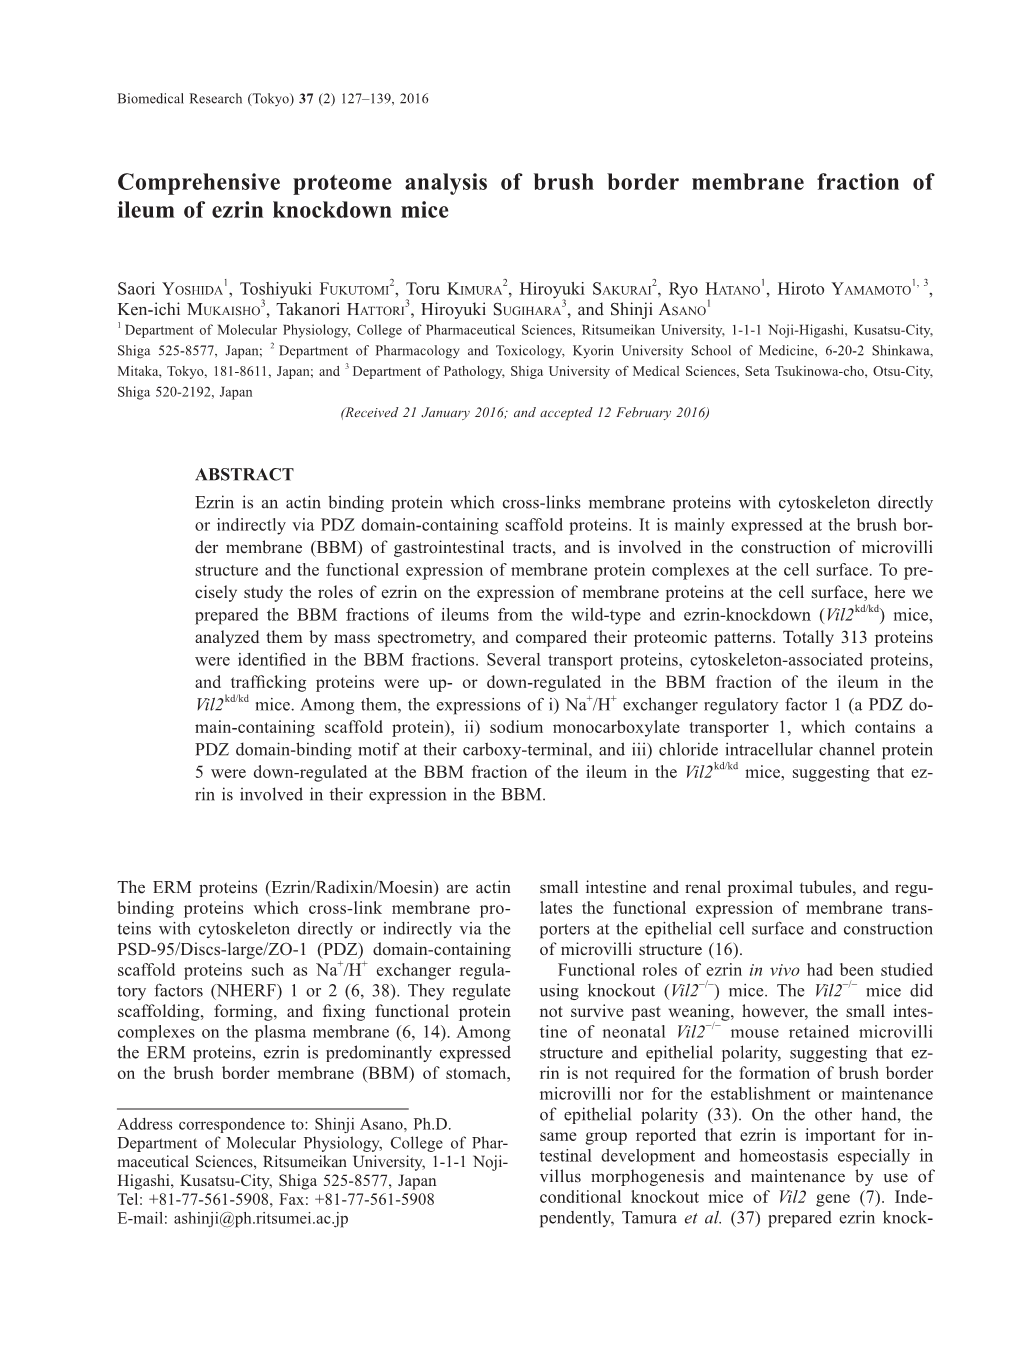 Comprehensive Proteome Analysis of Brush Border Membrane Fraction of Ileum of Ezrin Knockdown Mice